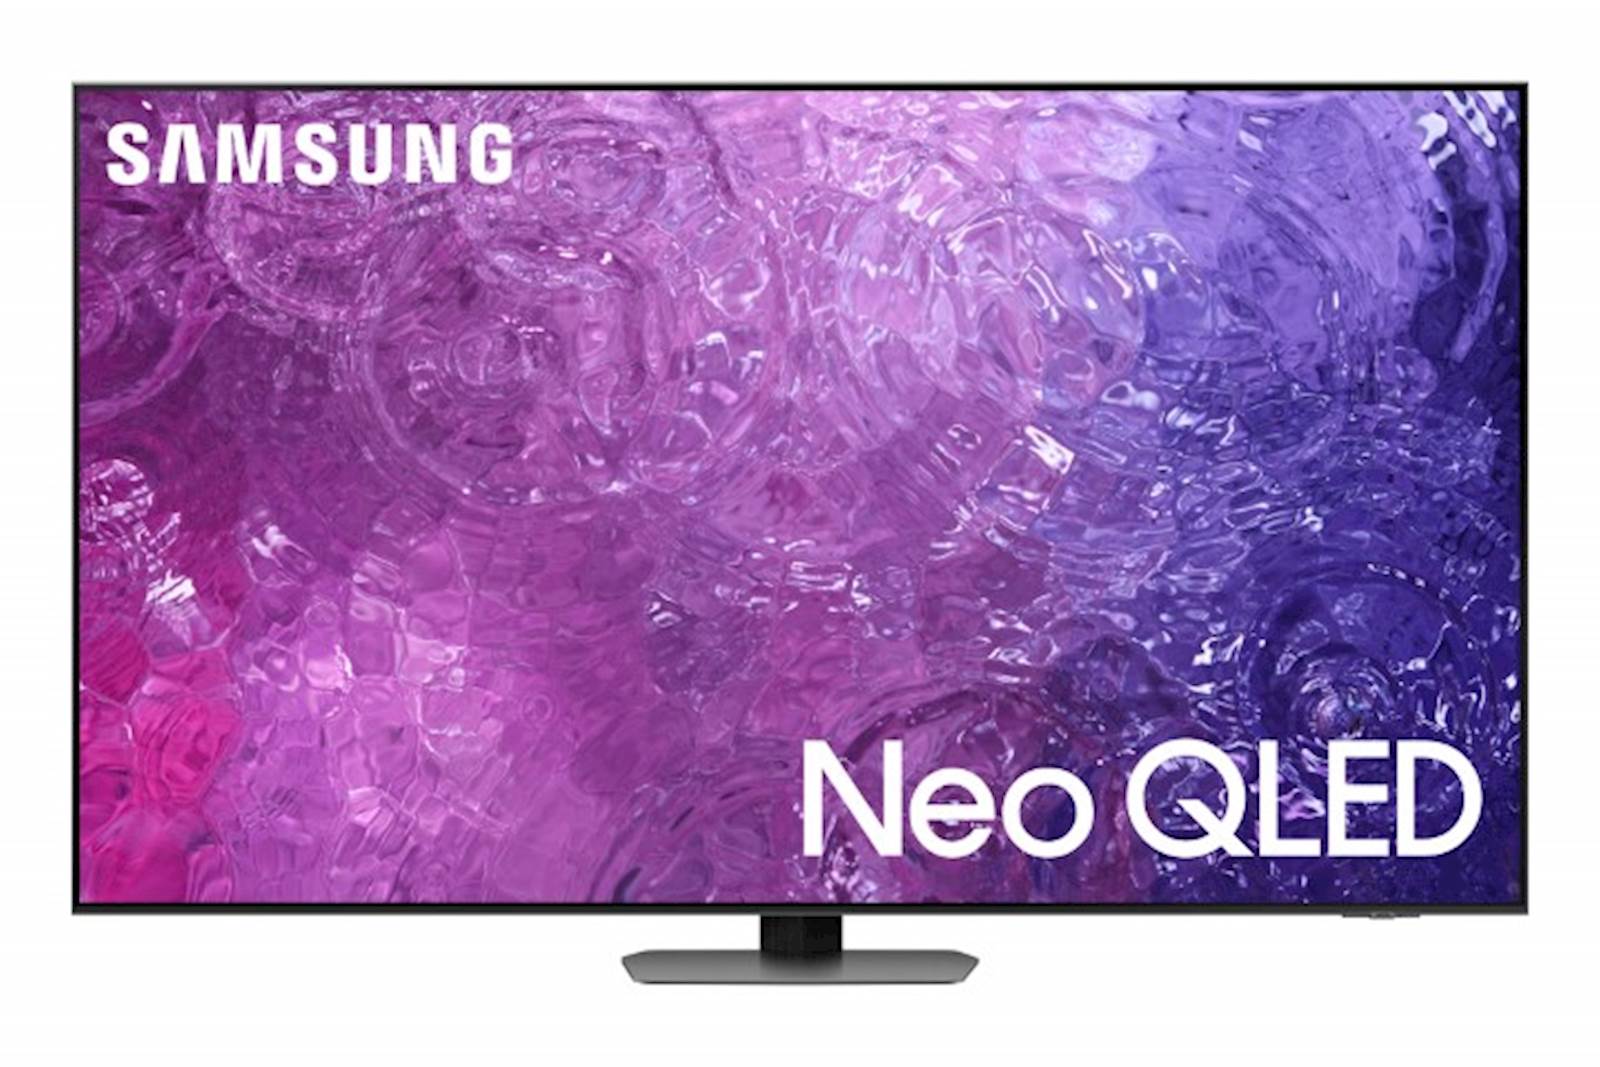 NEO QLED TV Samsung 55QN90C